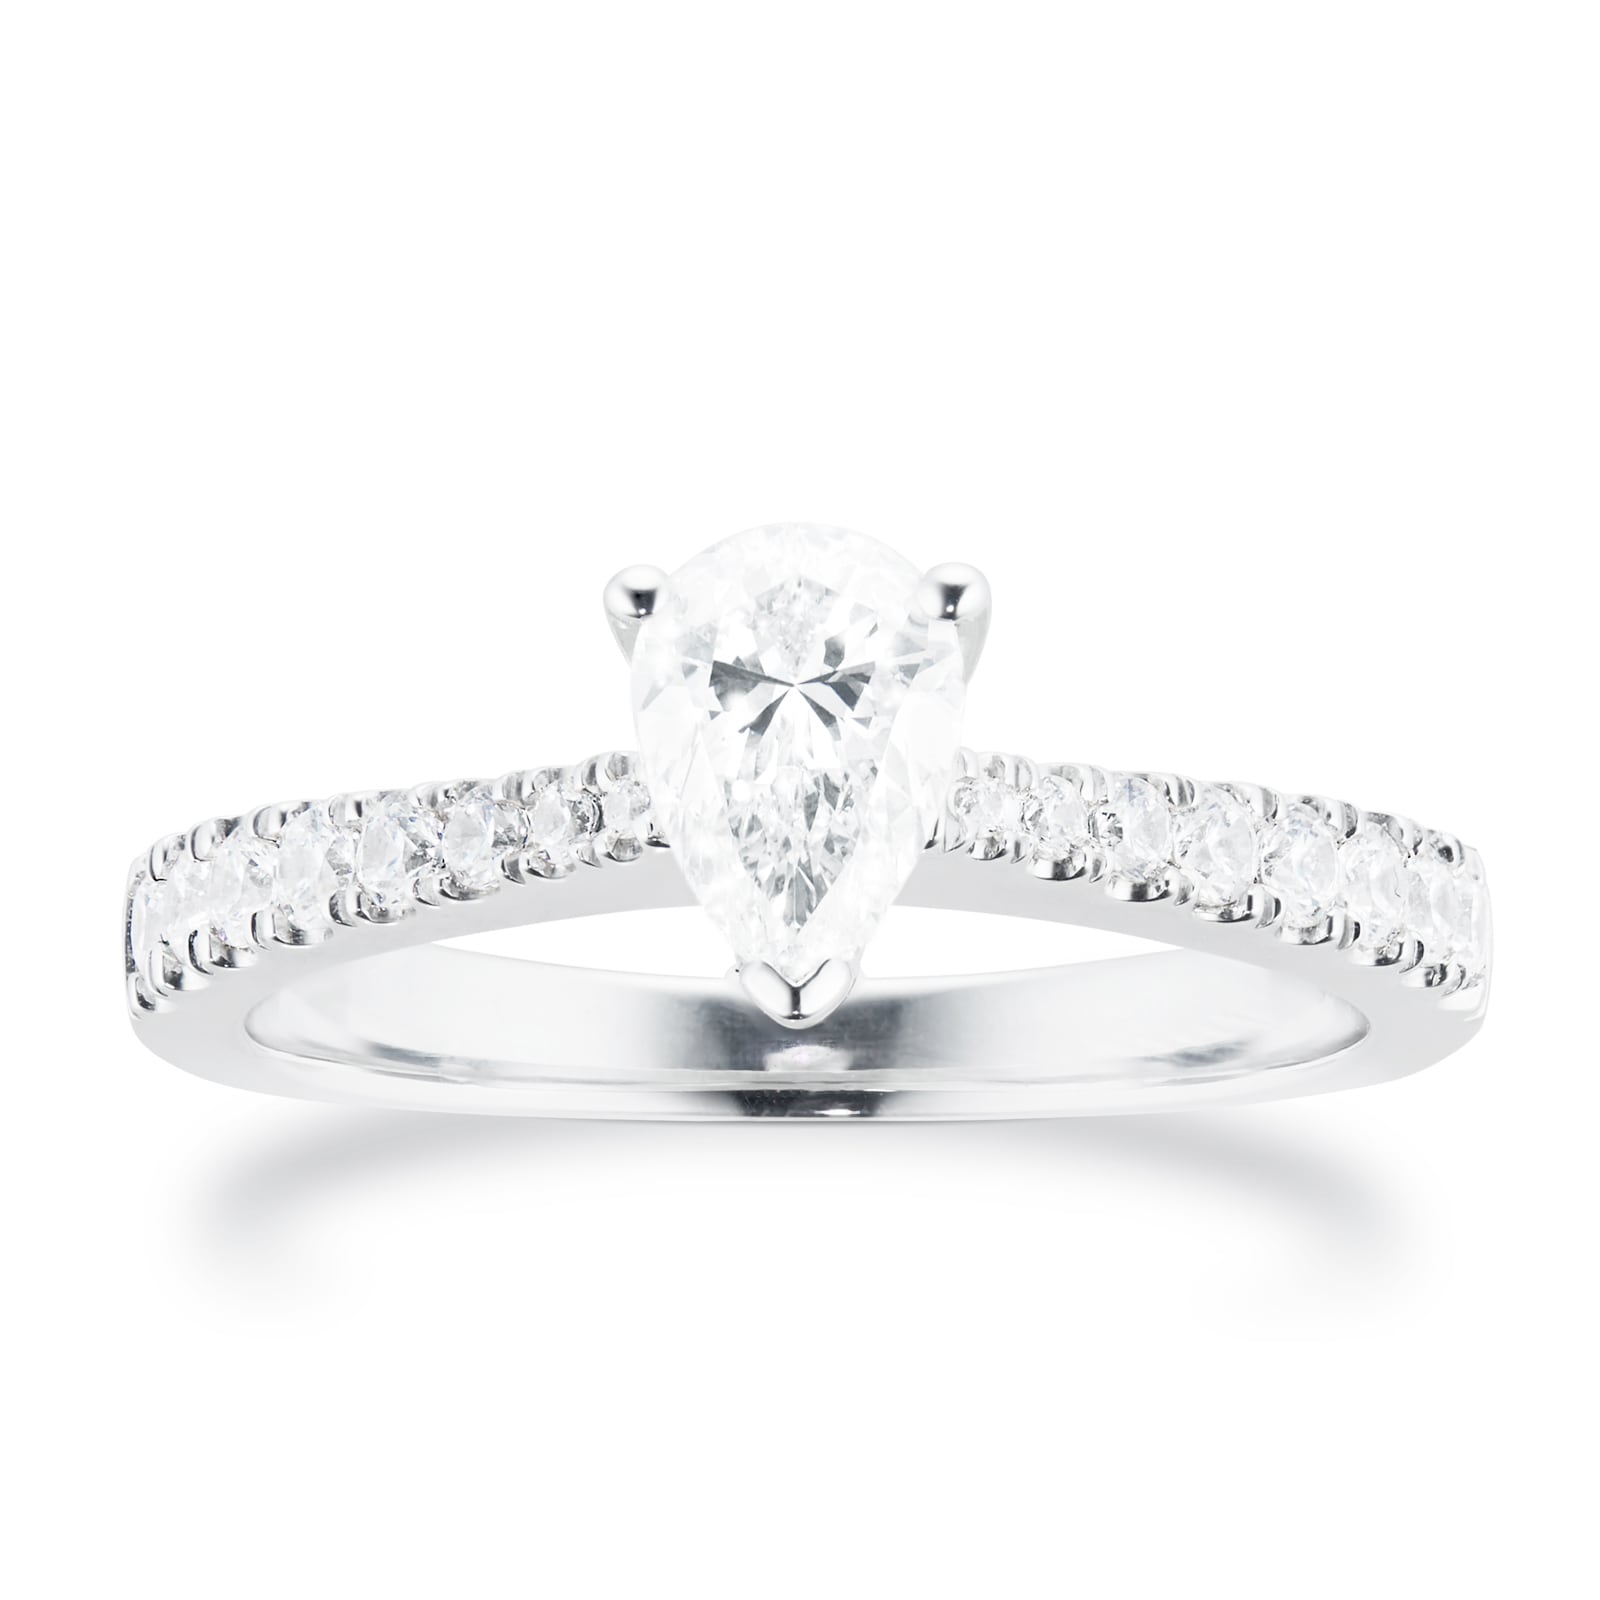 Platinum 0.70cttw Goldsmiths Brightest Diamond Pear Cut Solitaire Engagement Ring - Ring Size P